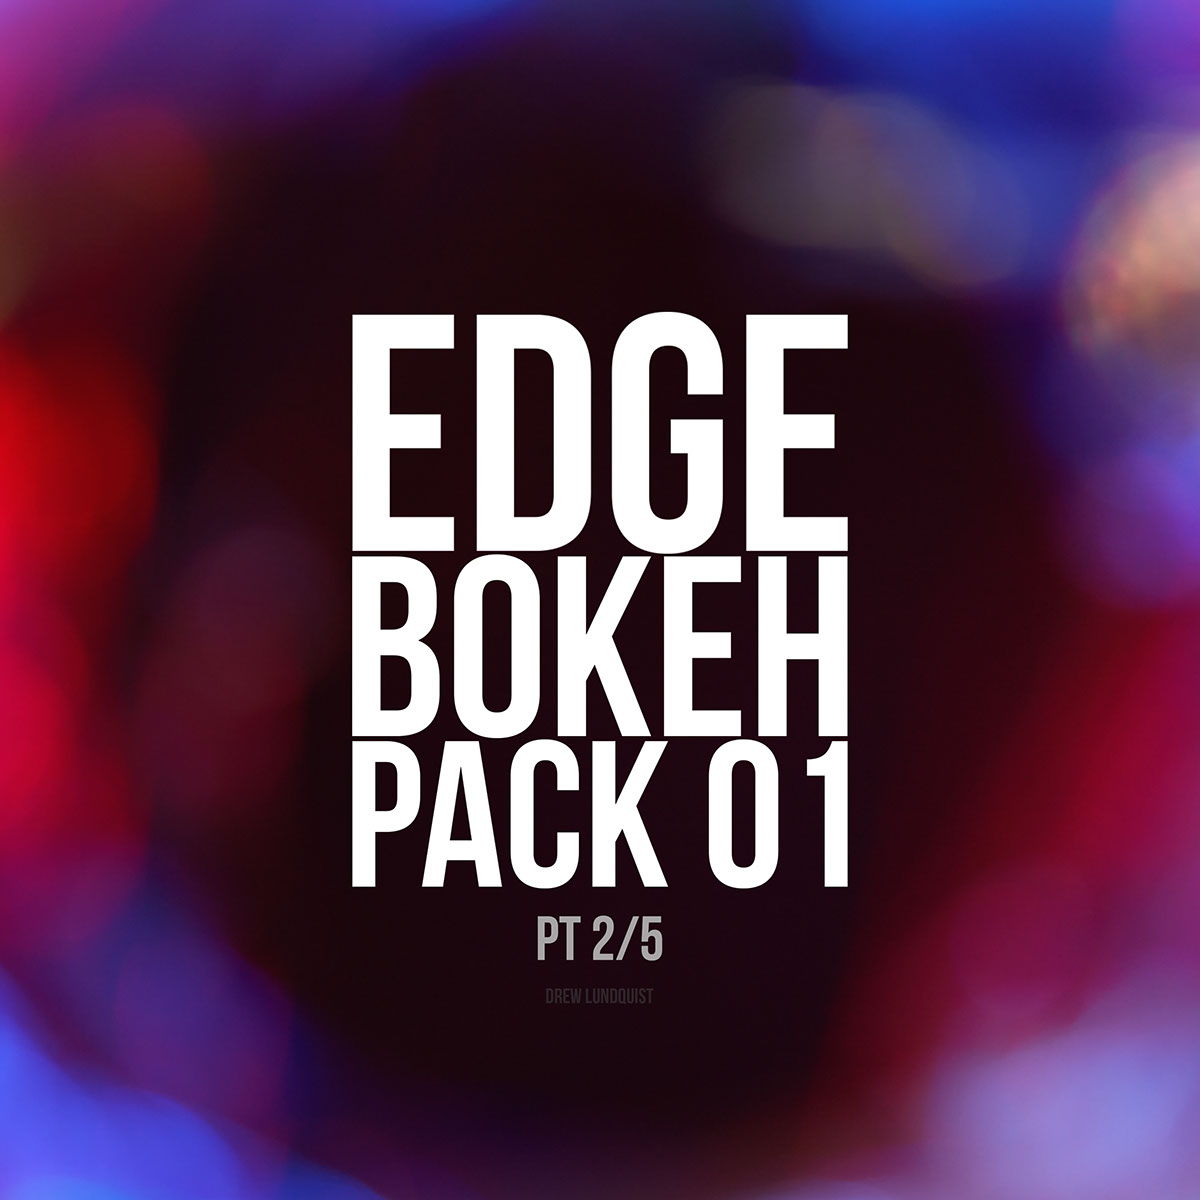 Edge Bokeh Pack 01 - Pt2 rendition image